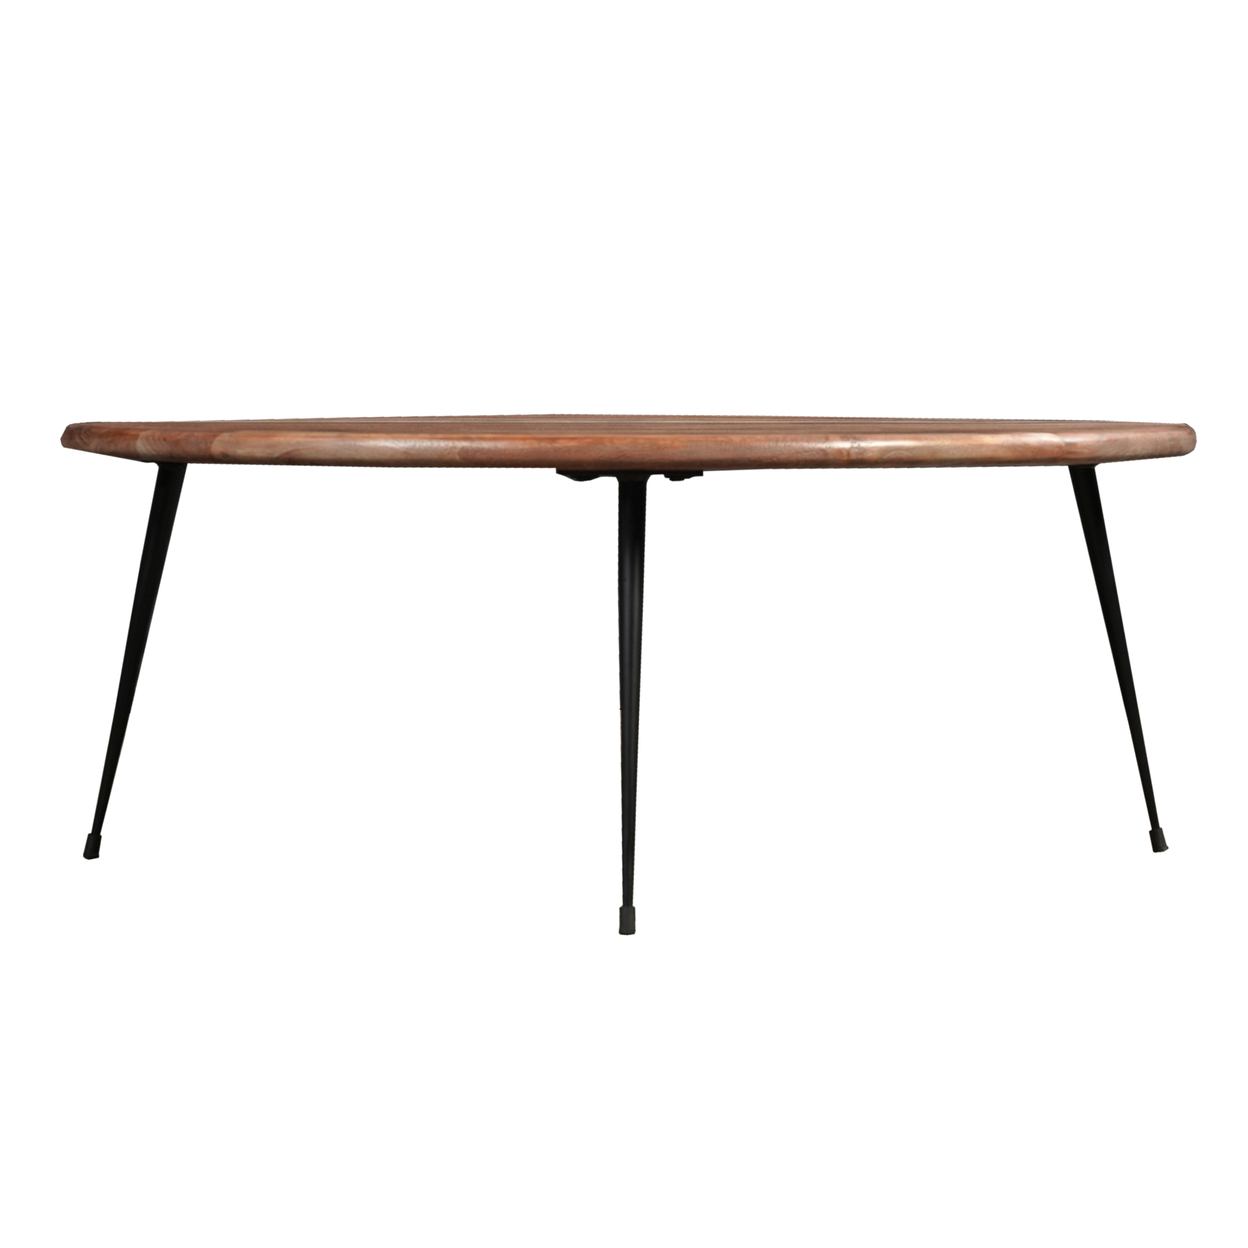 35 Inch Coffee Table, Round Sandblasted Brown Acacia Wood Top, Sleek Iron Legs - Saltoro Sherpi